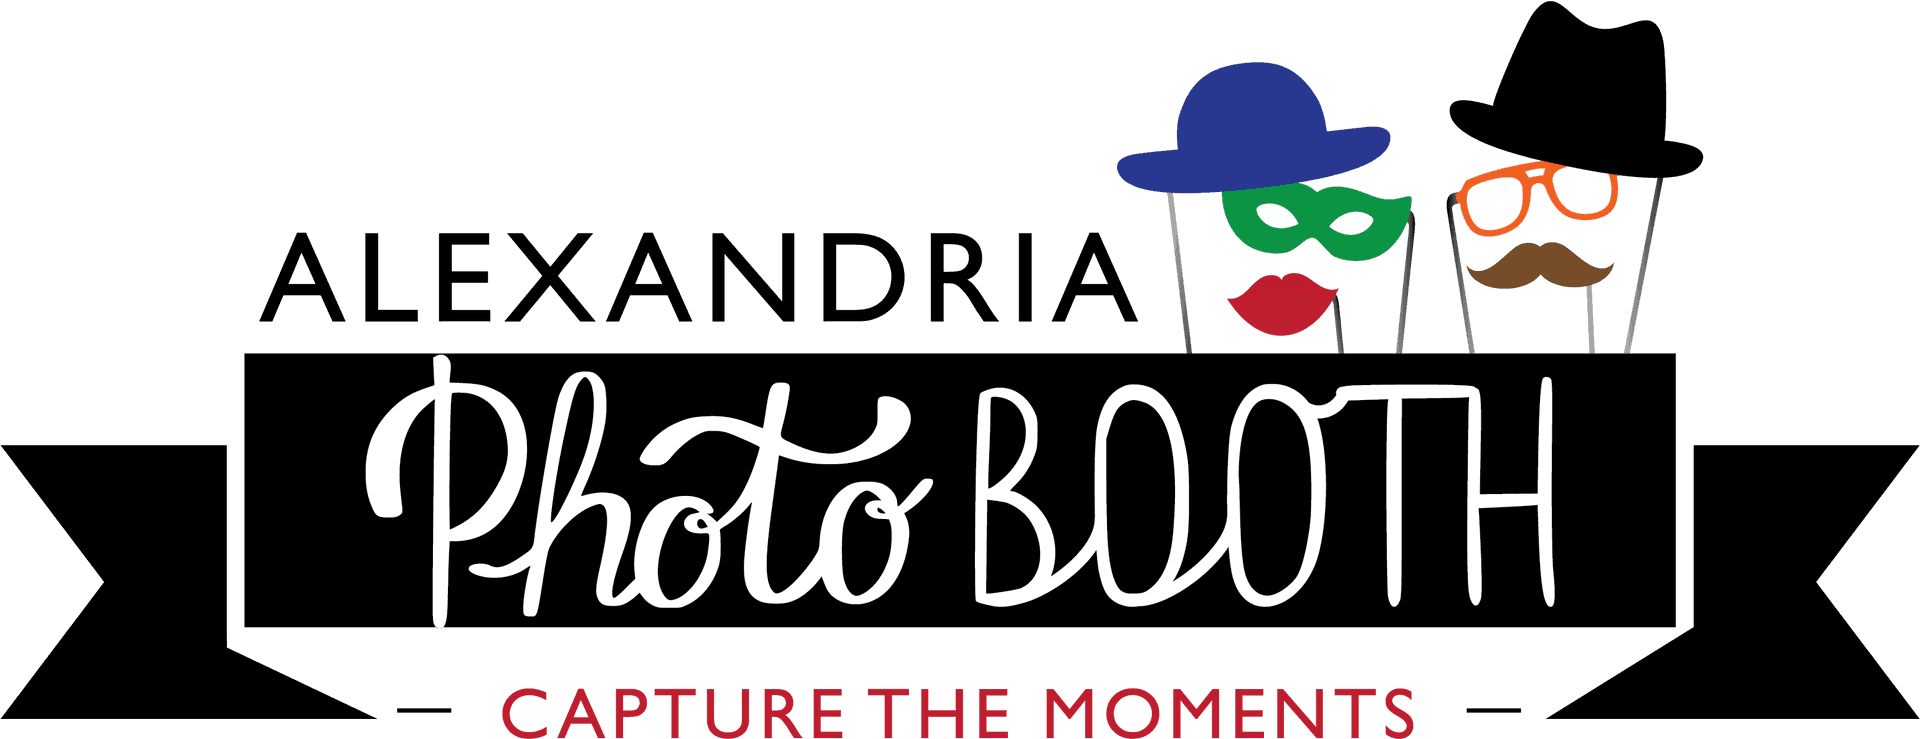 Alexandria Photo Booth Logo PNG image